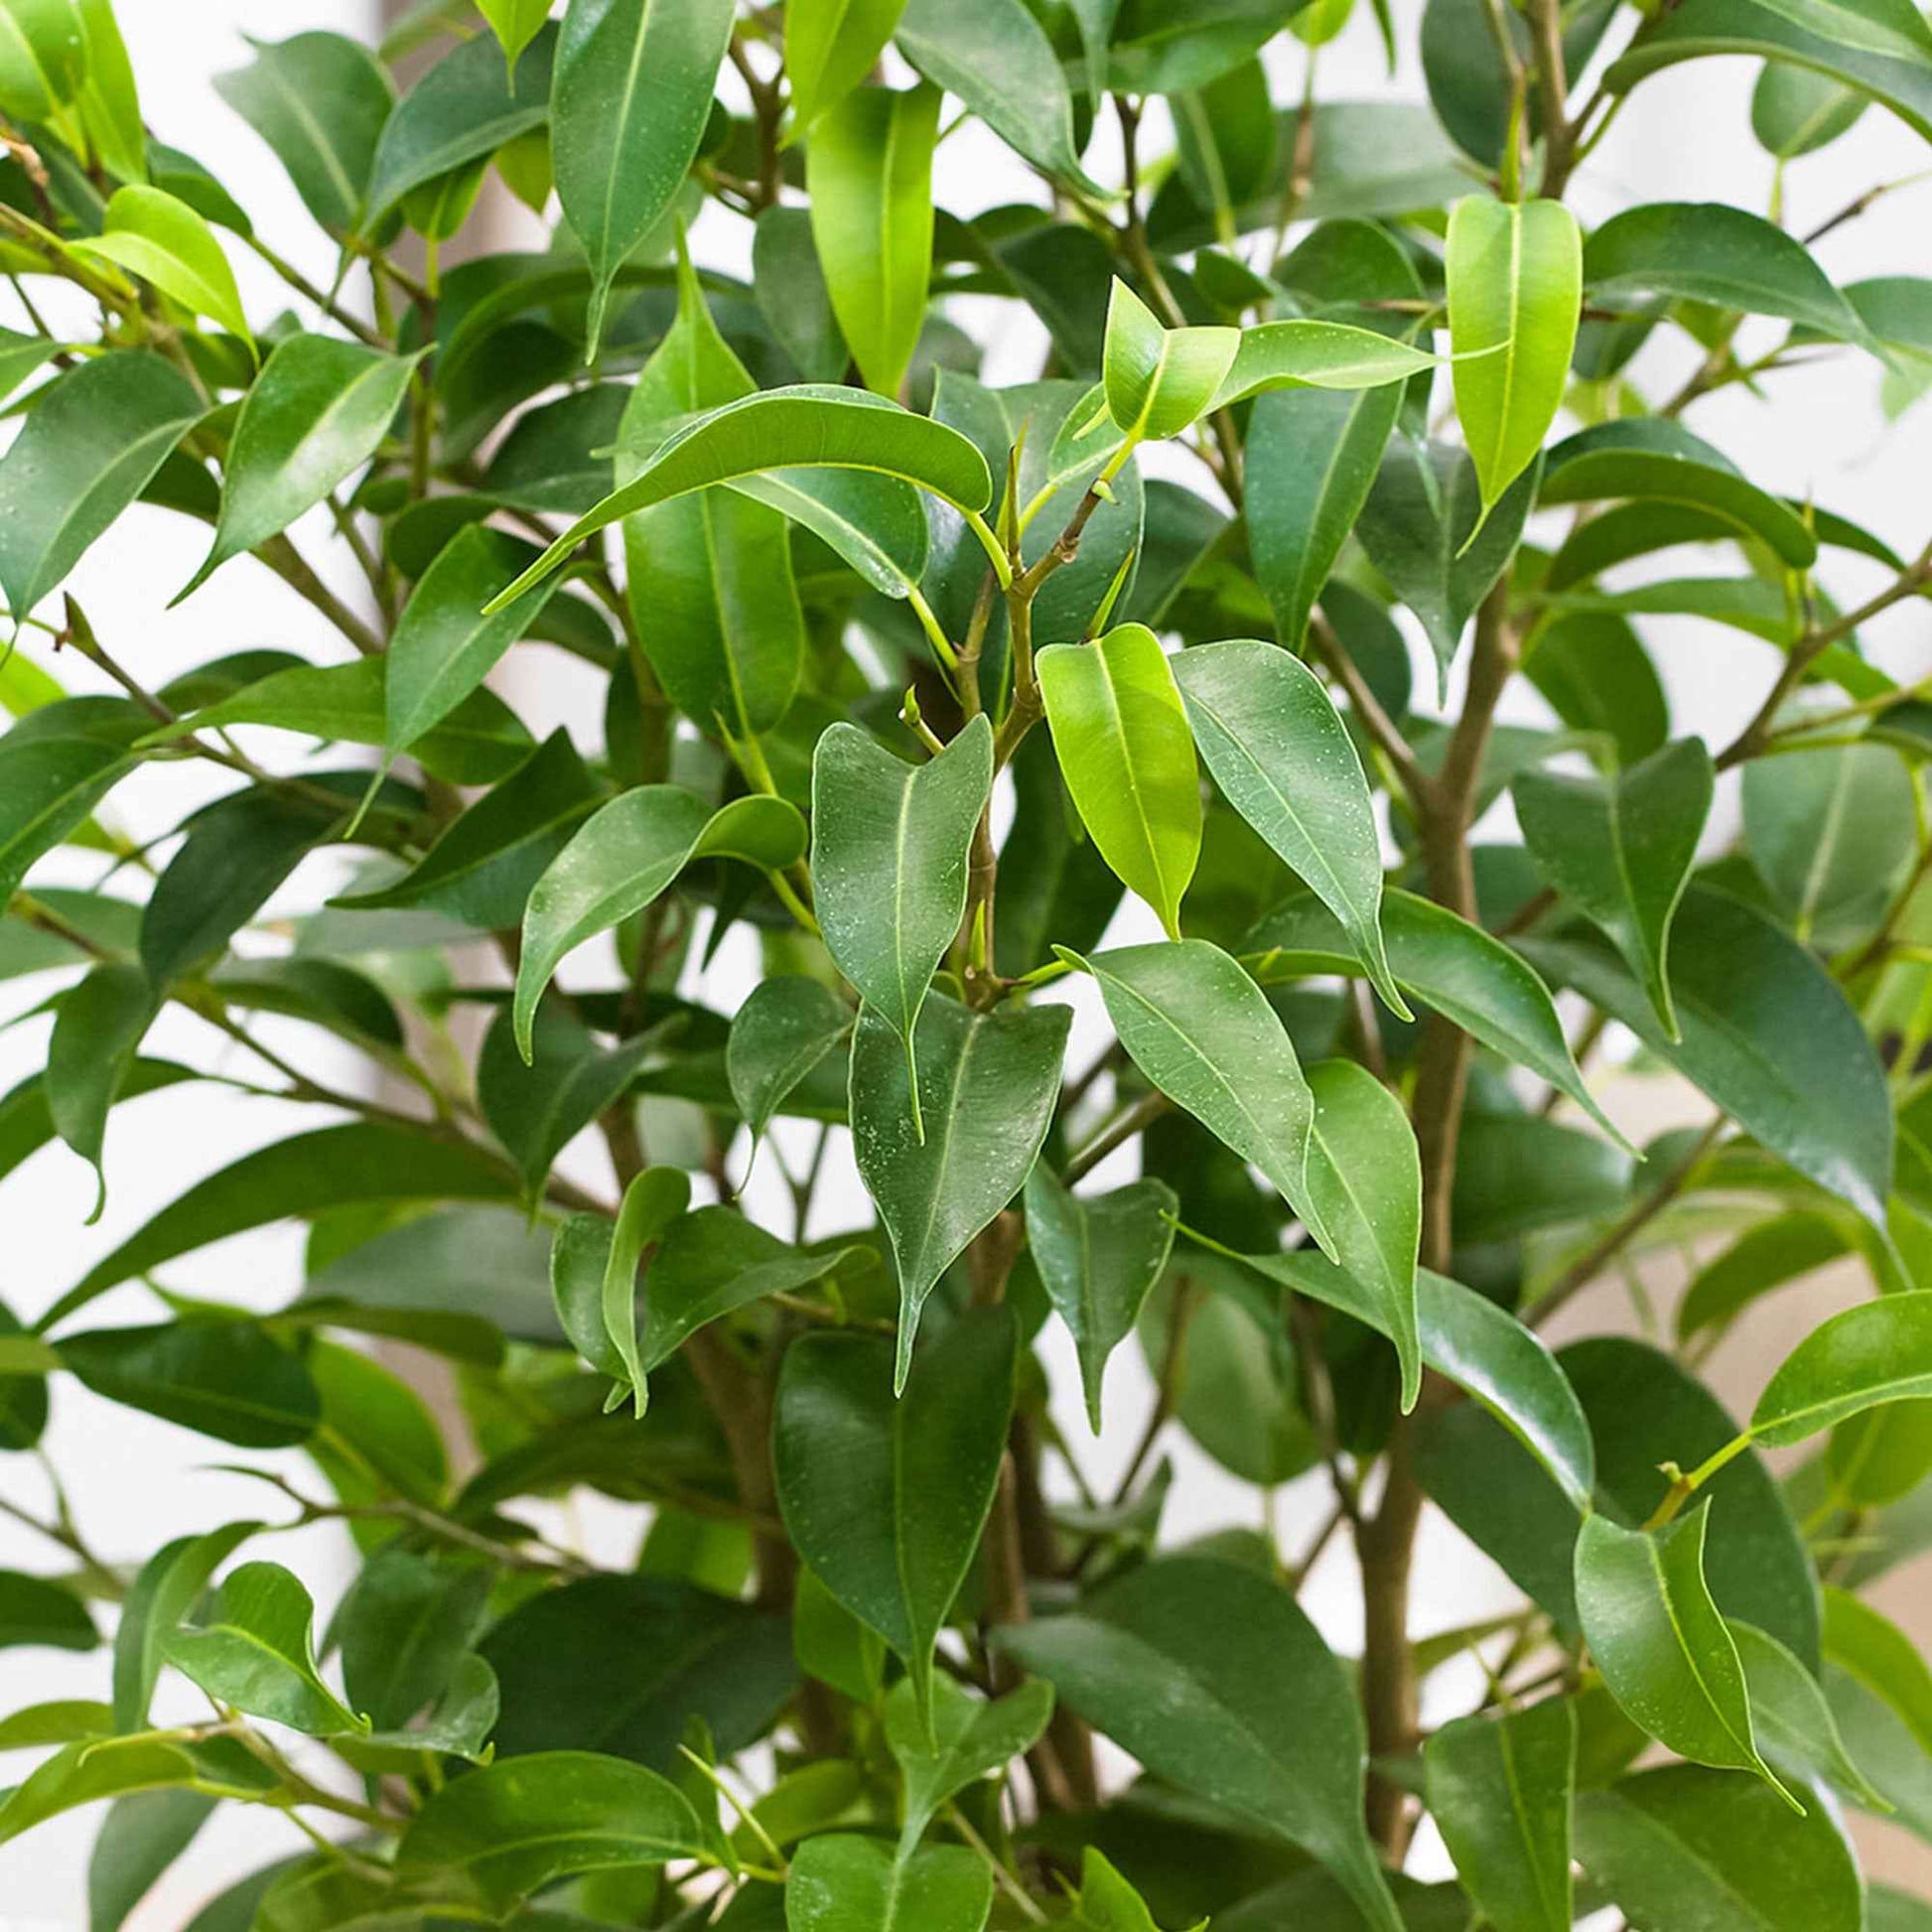 2x Treurvijg Ficus benjamina 'Natasja' - Groene kamerplanten